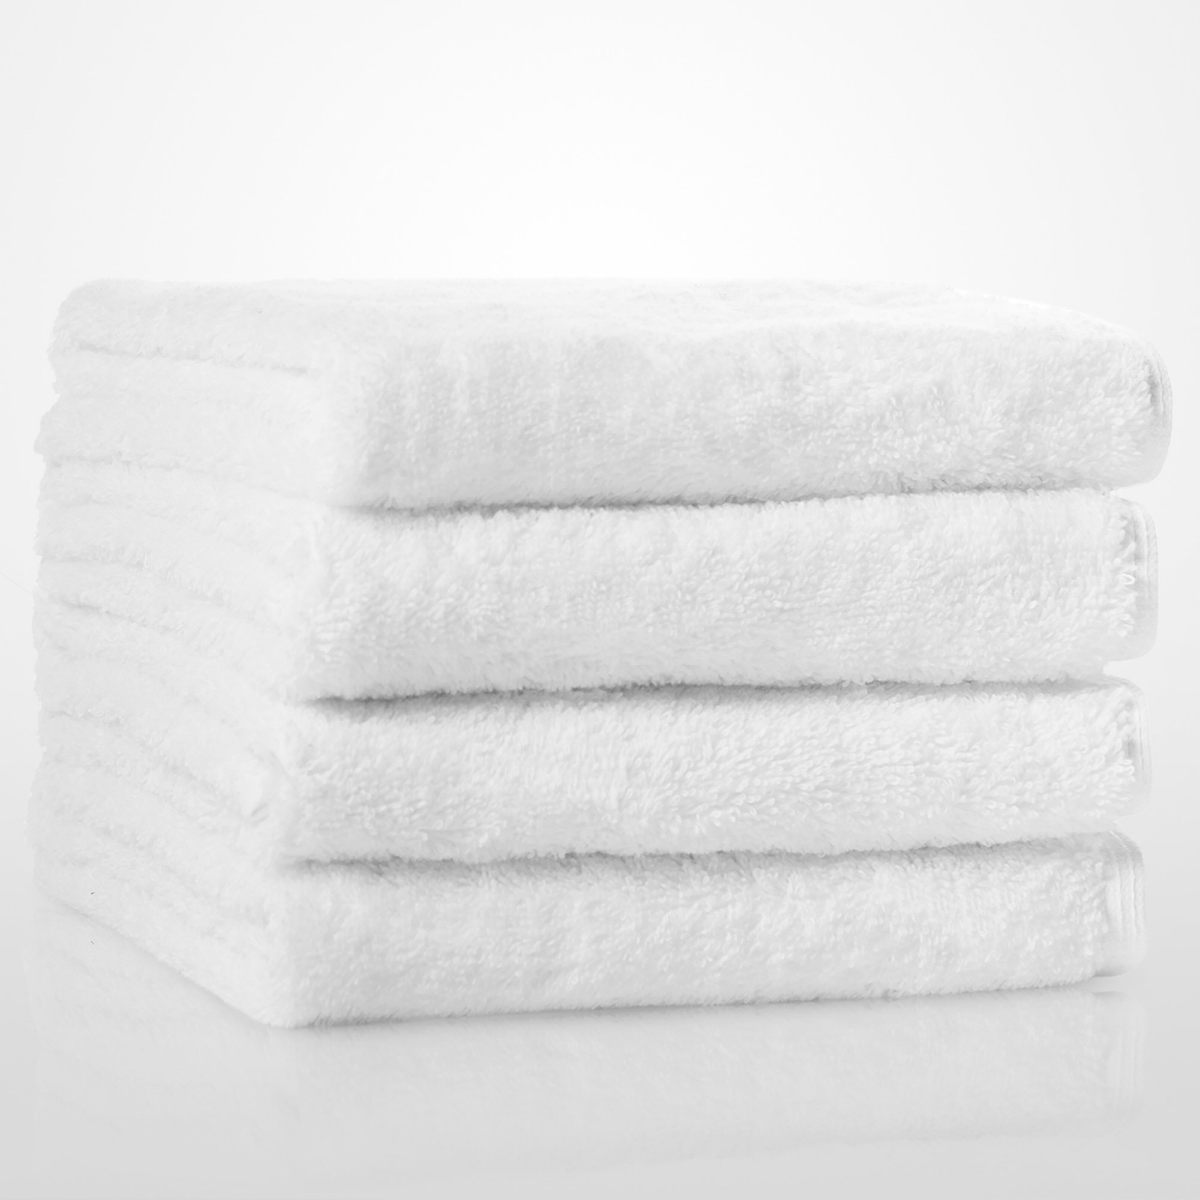 https://robemart.com/blog/wp-content/webpc-passthru.php?src=https://robemart.com/blog/wp-content/uploads/2019/09/16-x-29-100-turkish-cotton-white-terry-hand-towel-gym-towel.jpg&nocache=1